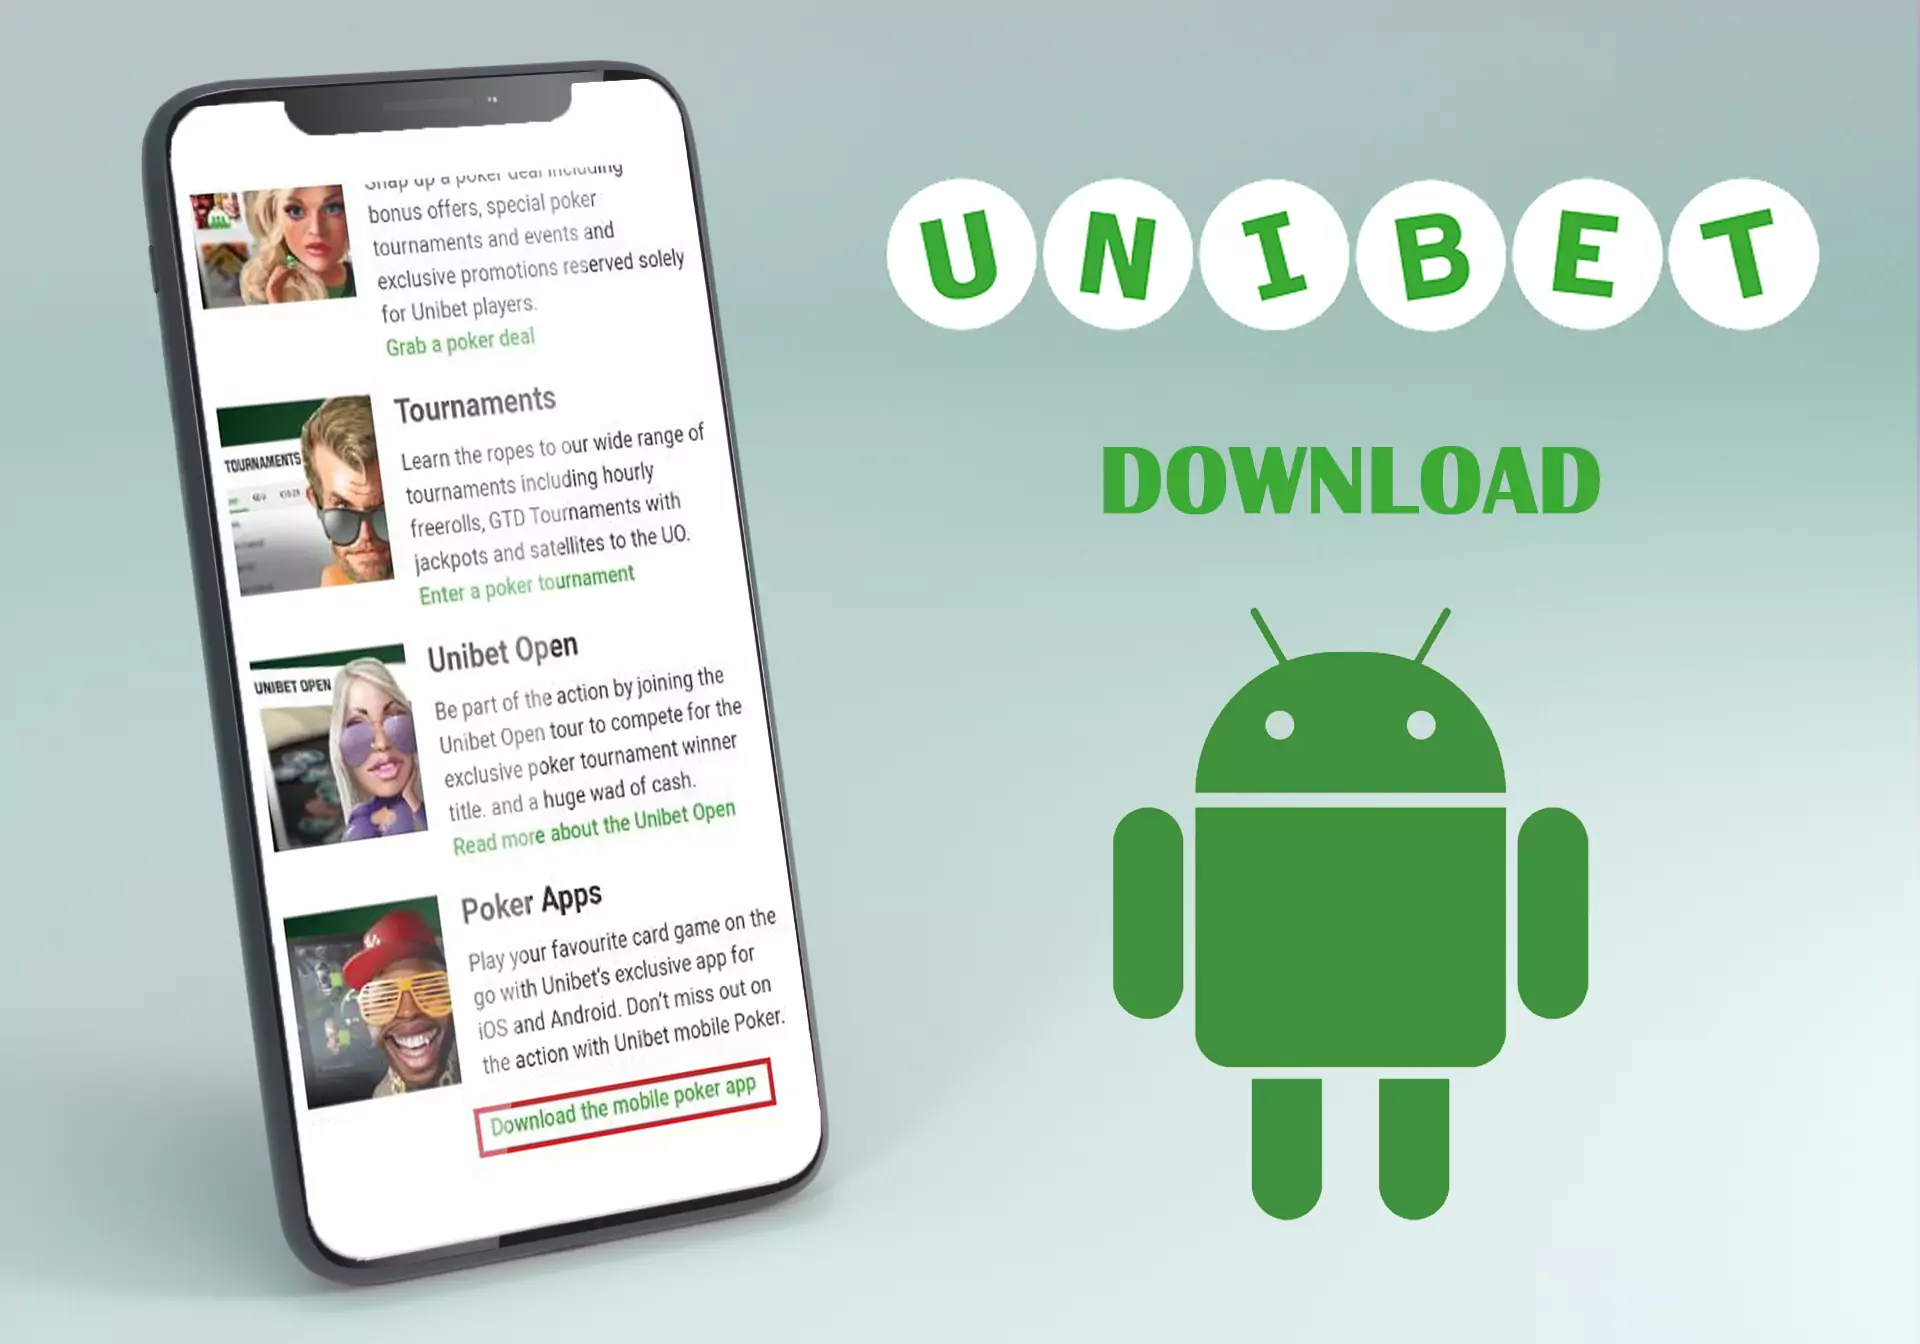 Download the mobile Unibet app.